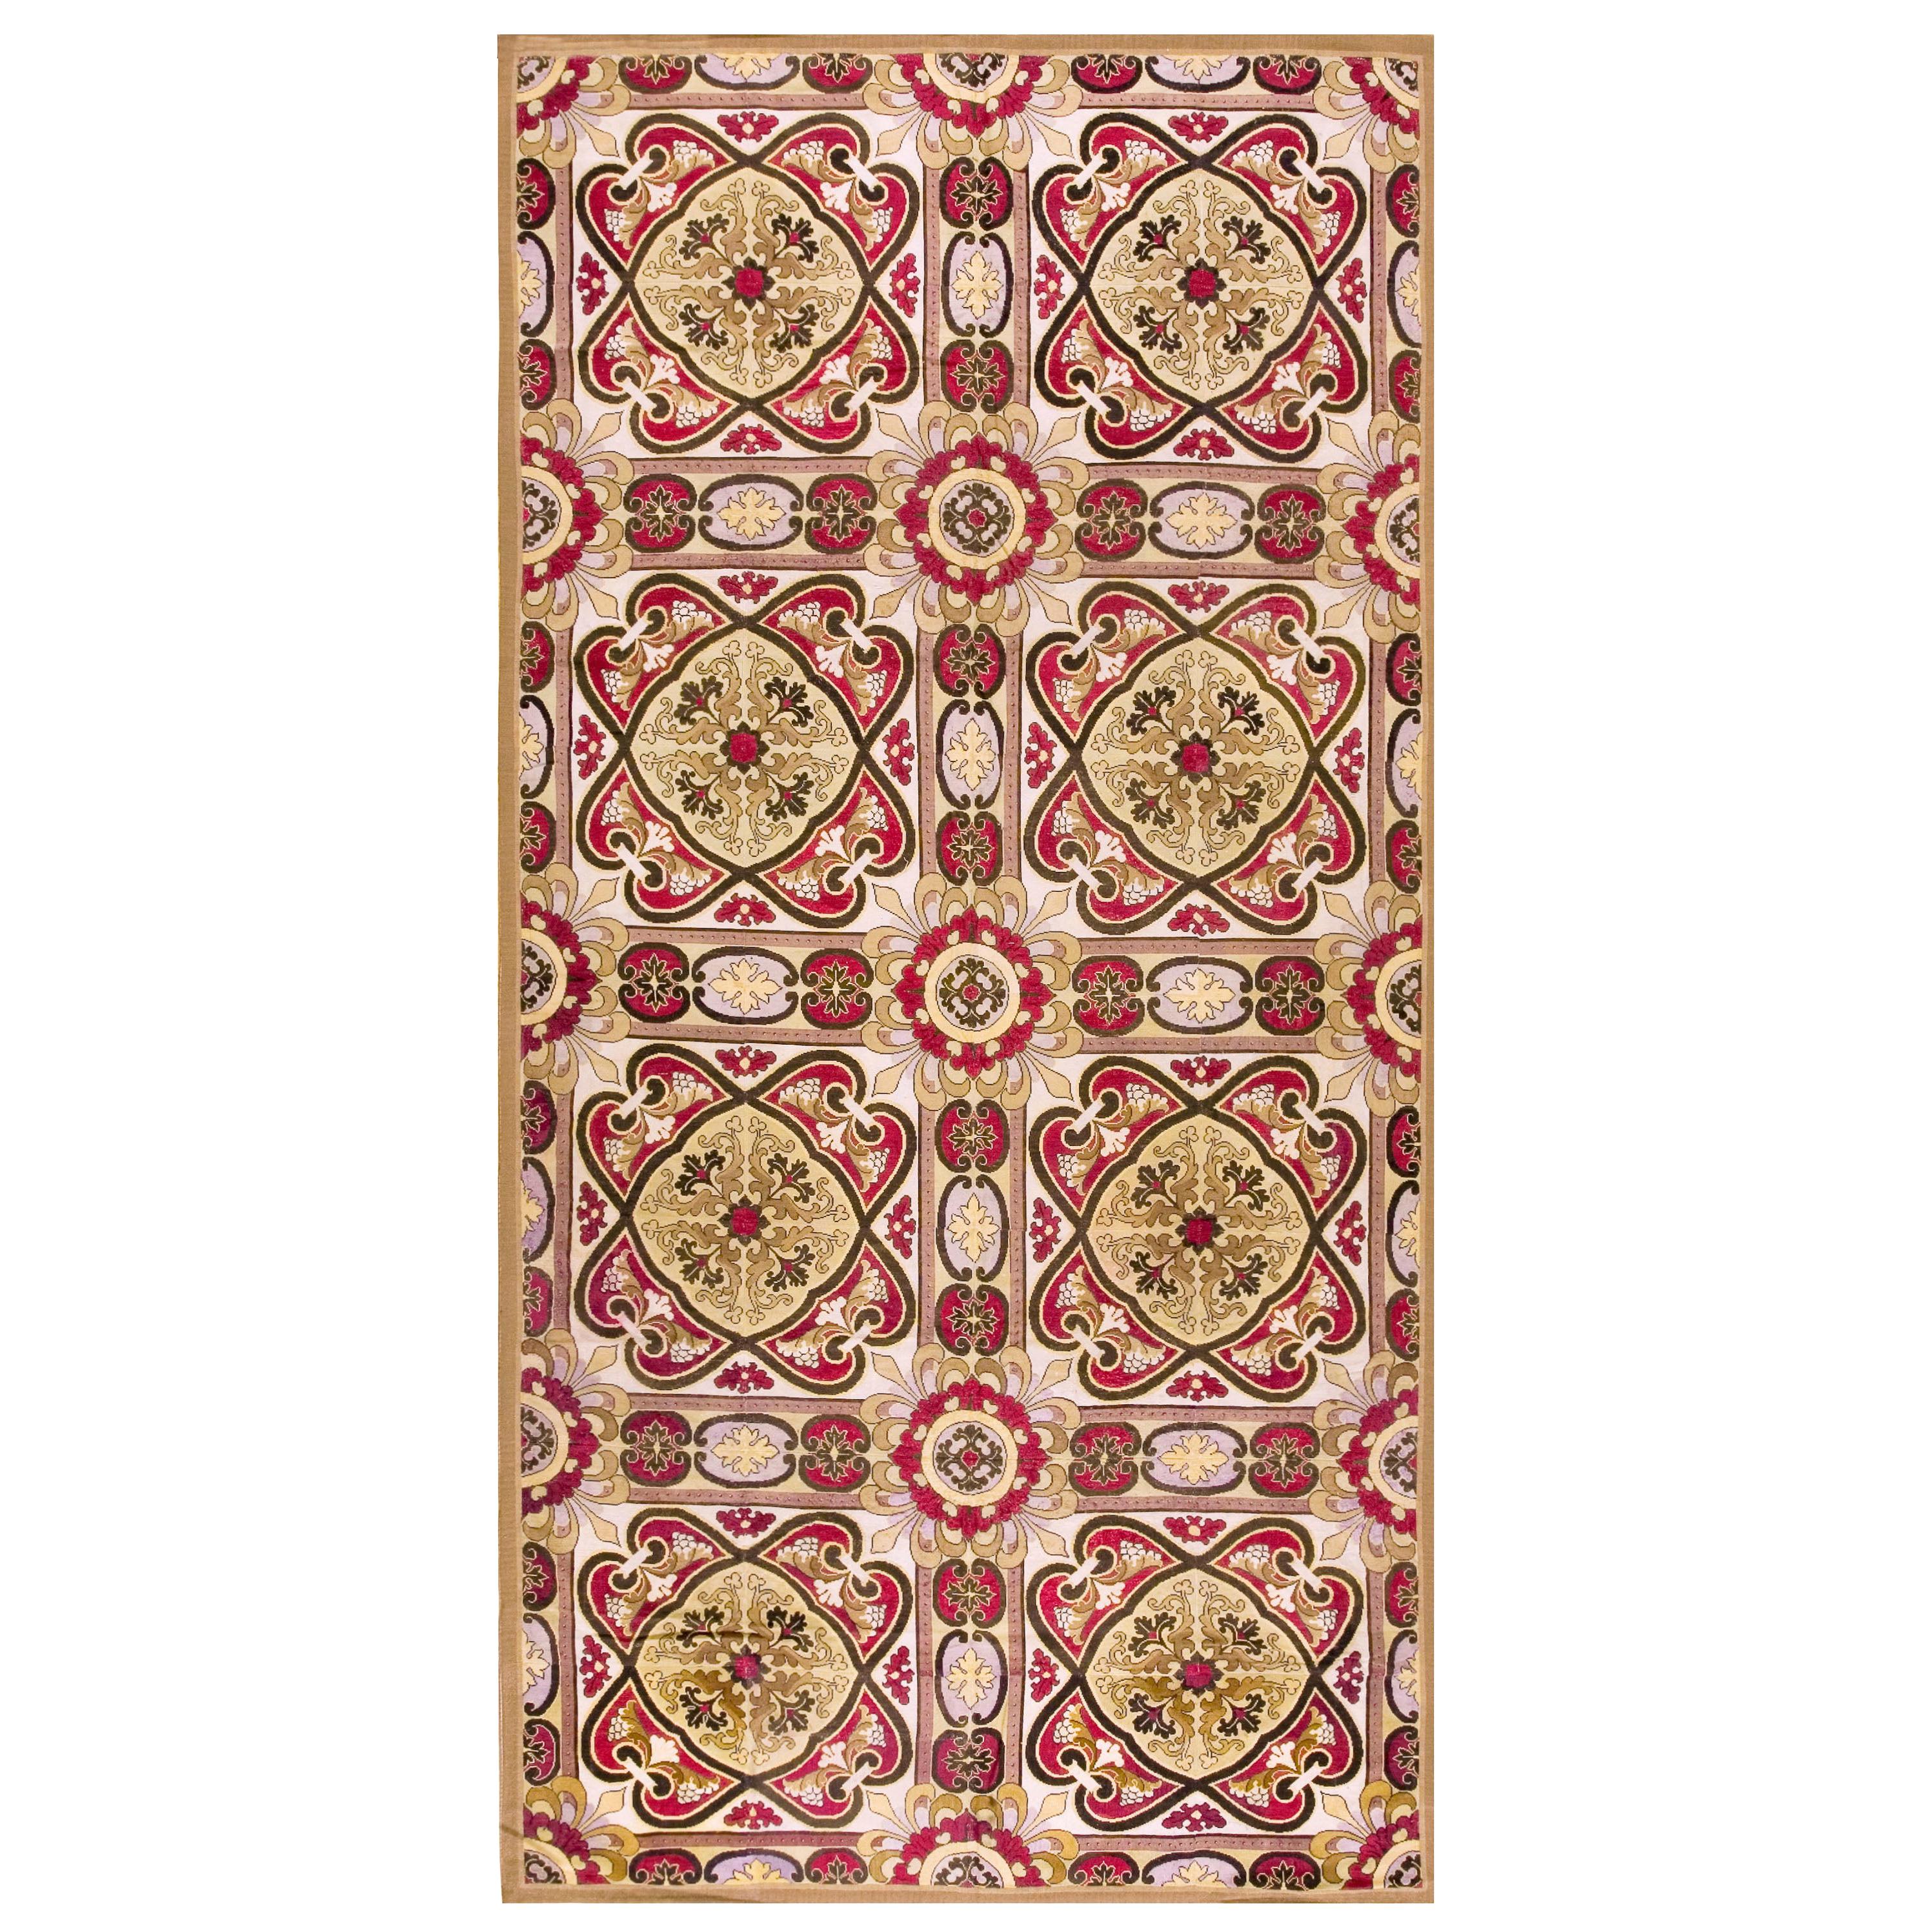 19th Century English Needlepoint Carpet ( 6'4" x 13'6" - 193 x 412 ) For Sale